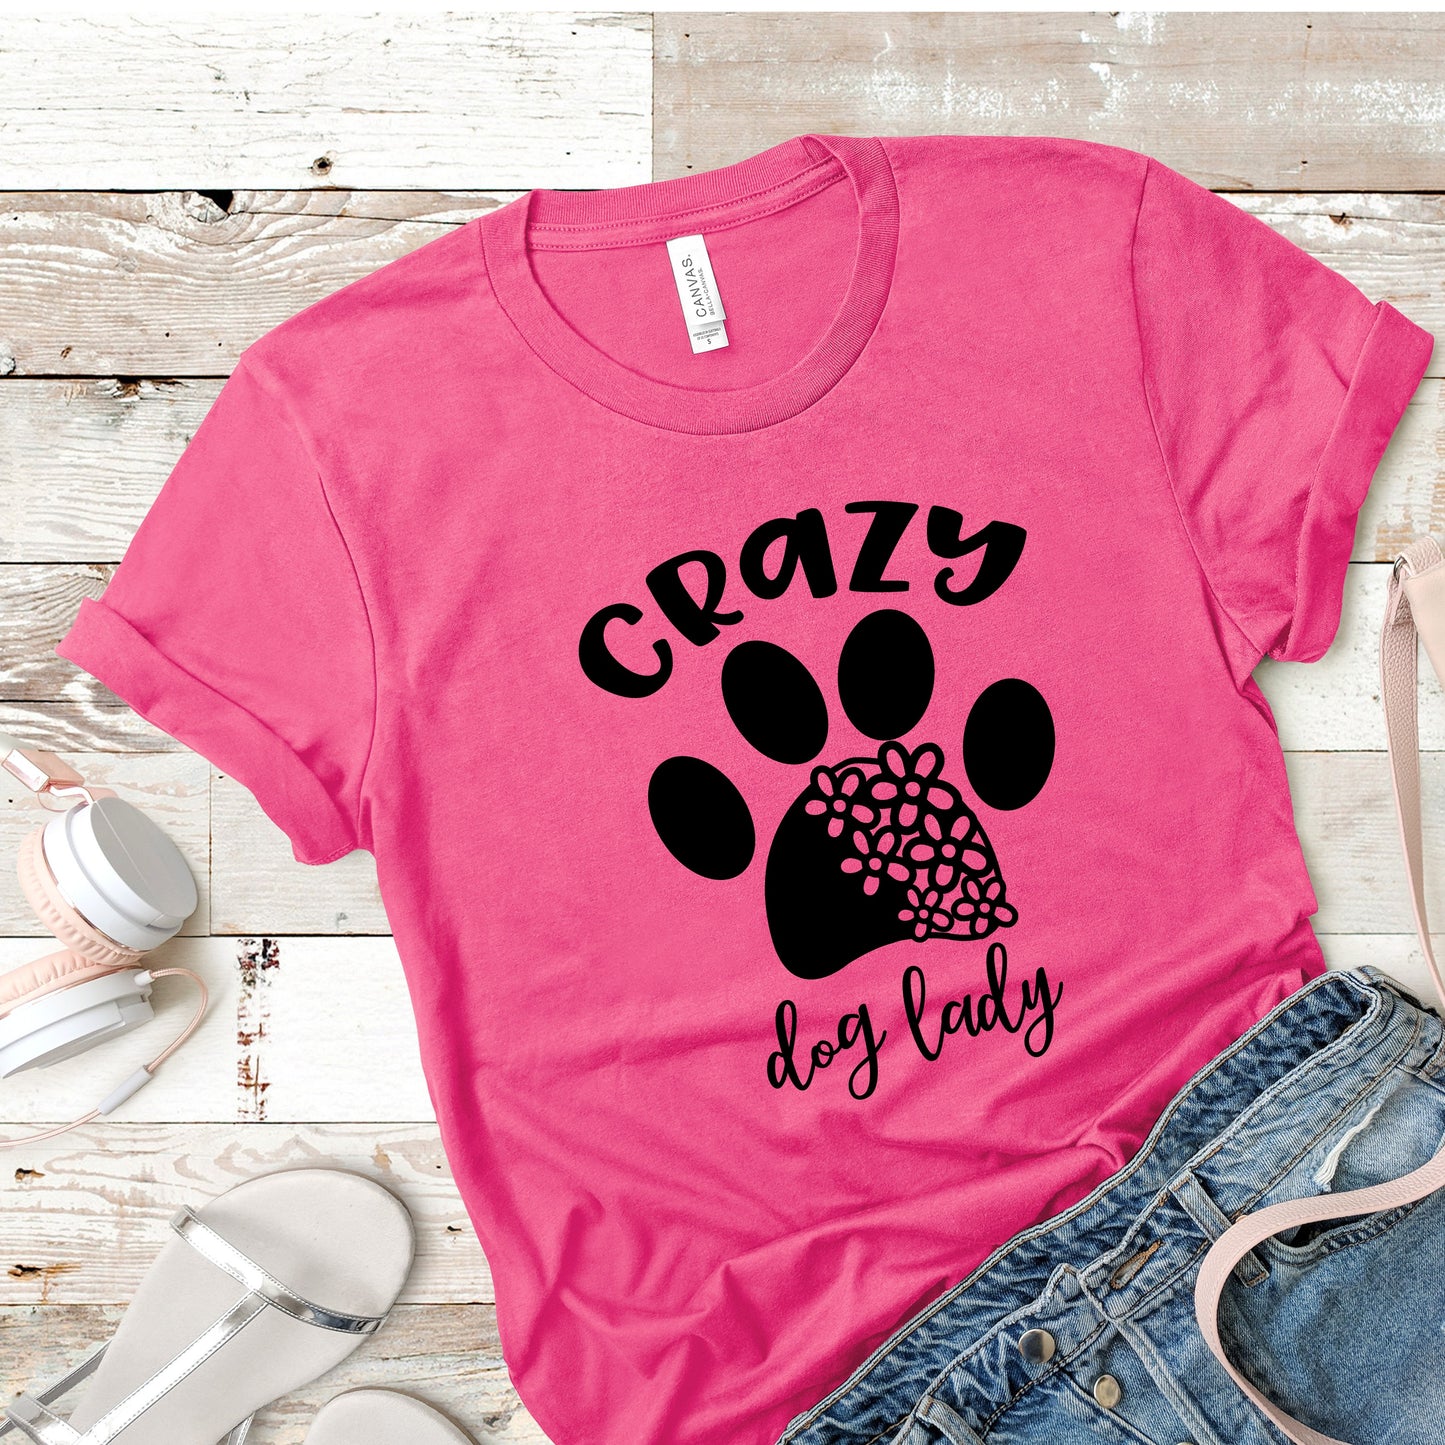 Fun, custom "Crazy dog lady" T-shirt